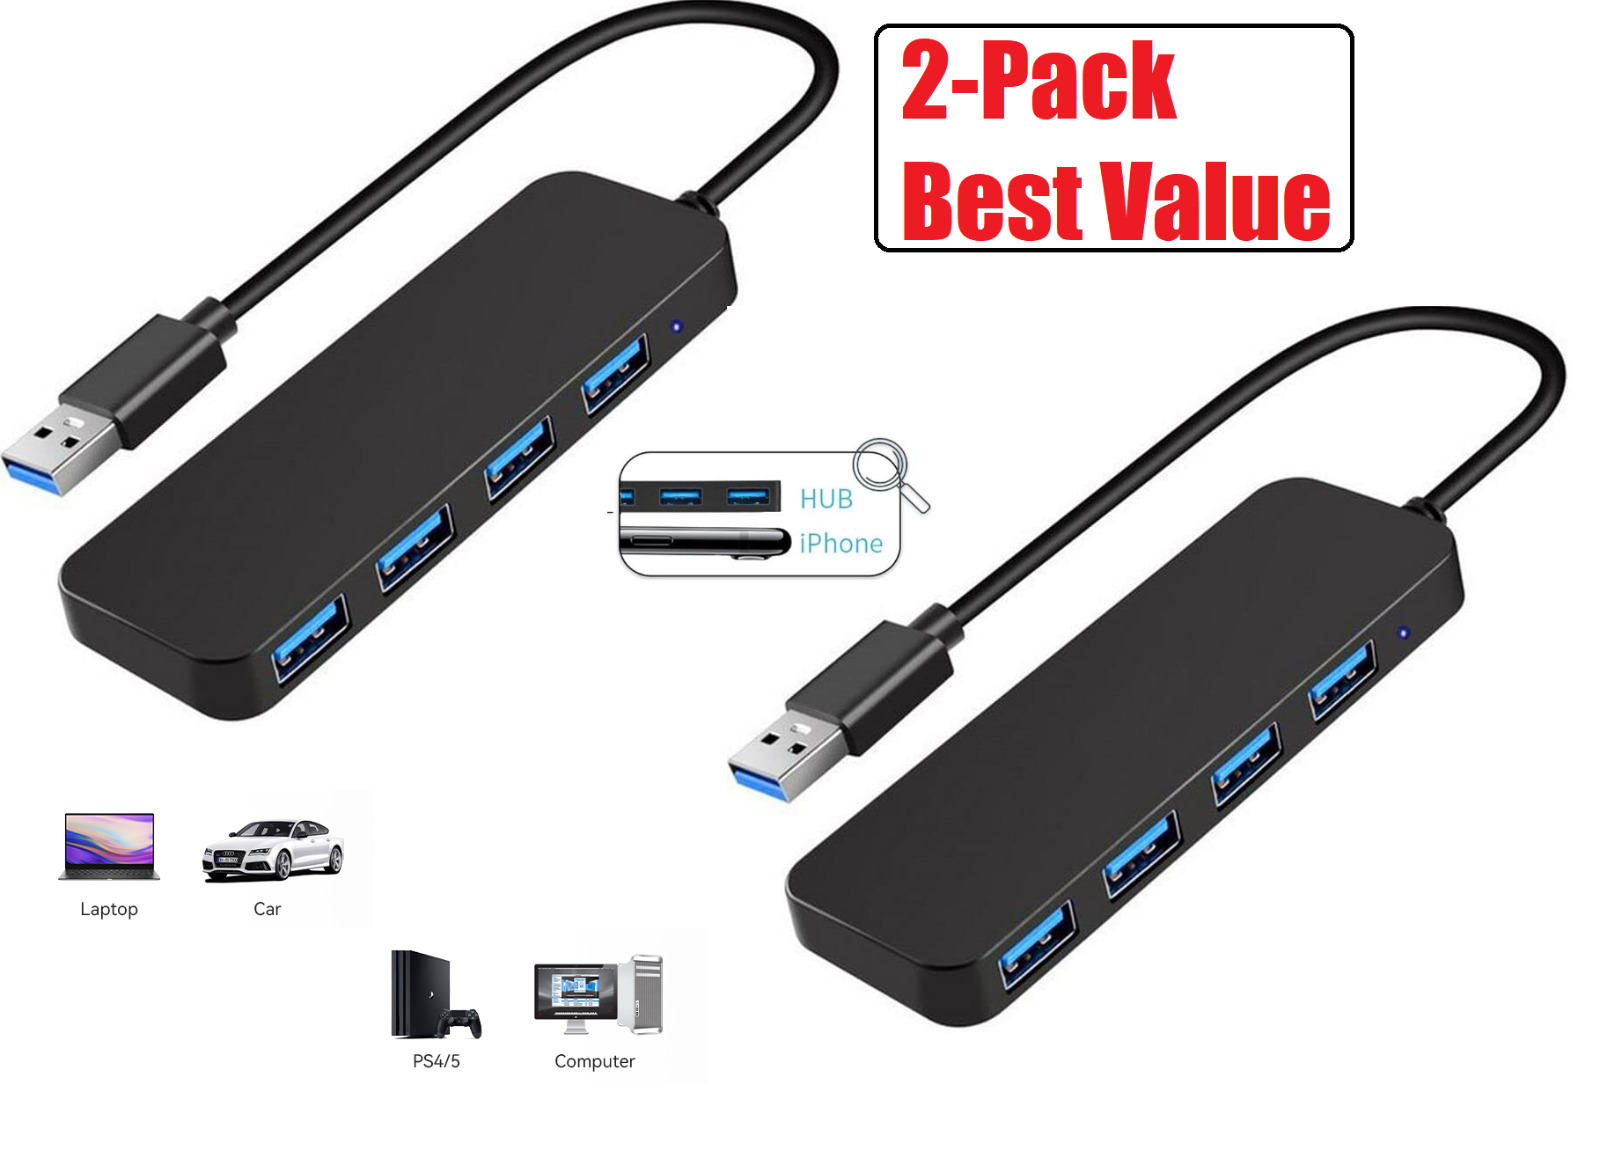 2-Pack USB 3.0 4-Port USB Hub USB Splitter USB Expander for Laptop, Flash Drive